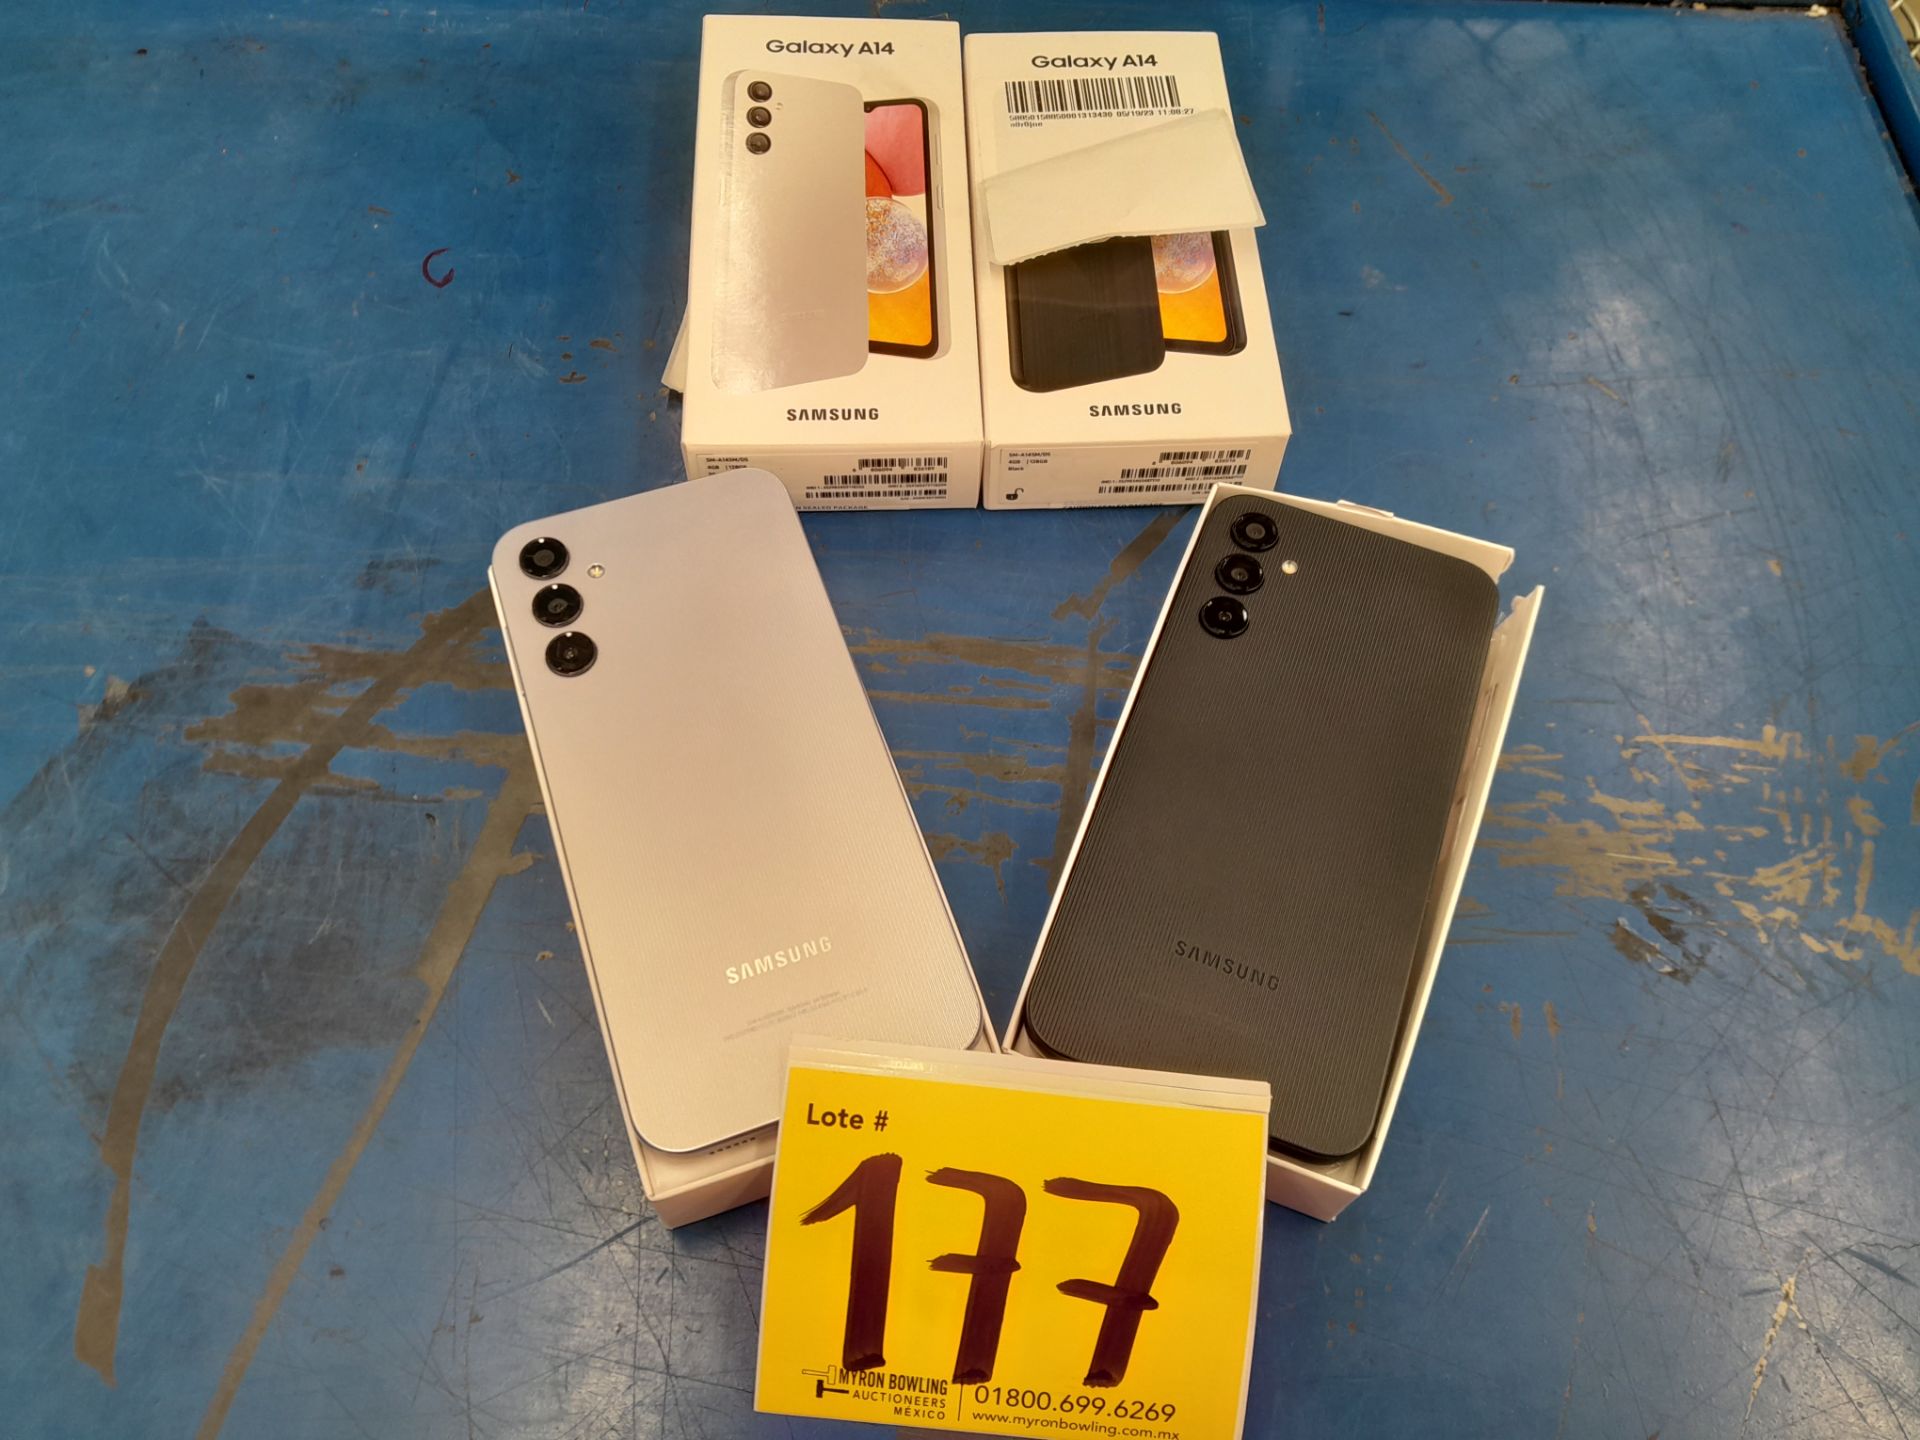 (NUEVO) Lote de 2 Teléfonos contiene: 1 Teléfono Marca SAMSUNG, Modelo GALAXY A14, Serie 0SZJ2A, Co - Image 7 of 10